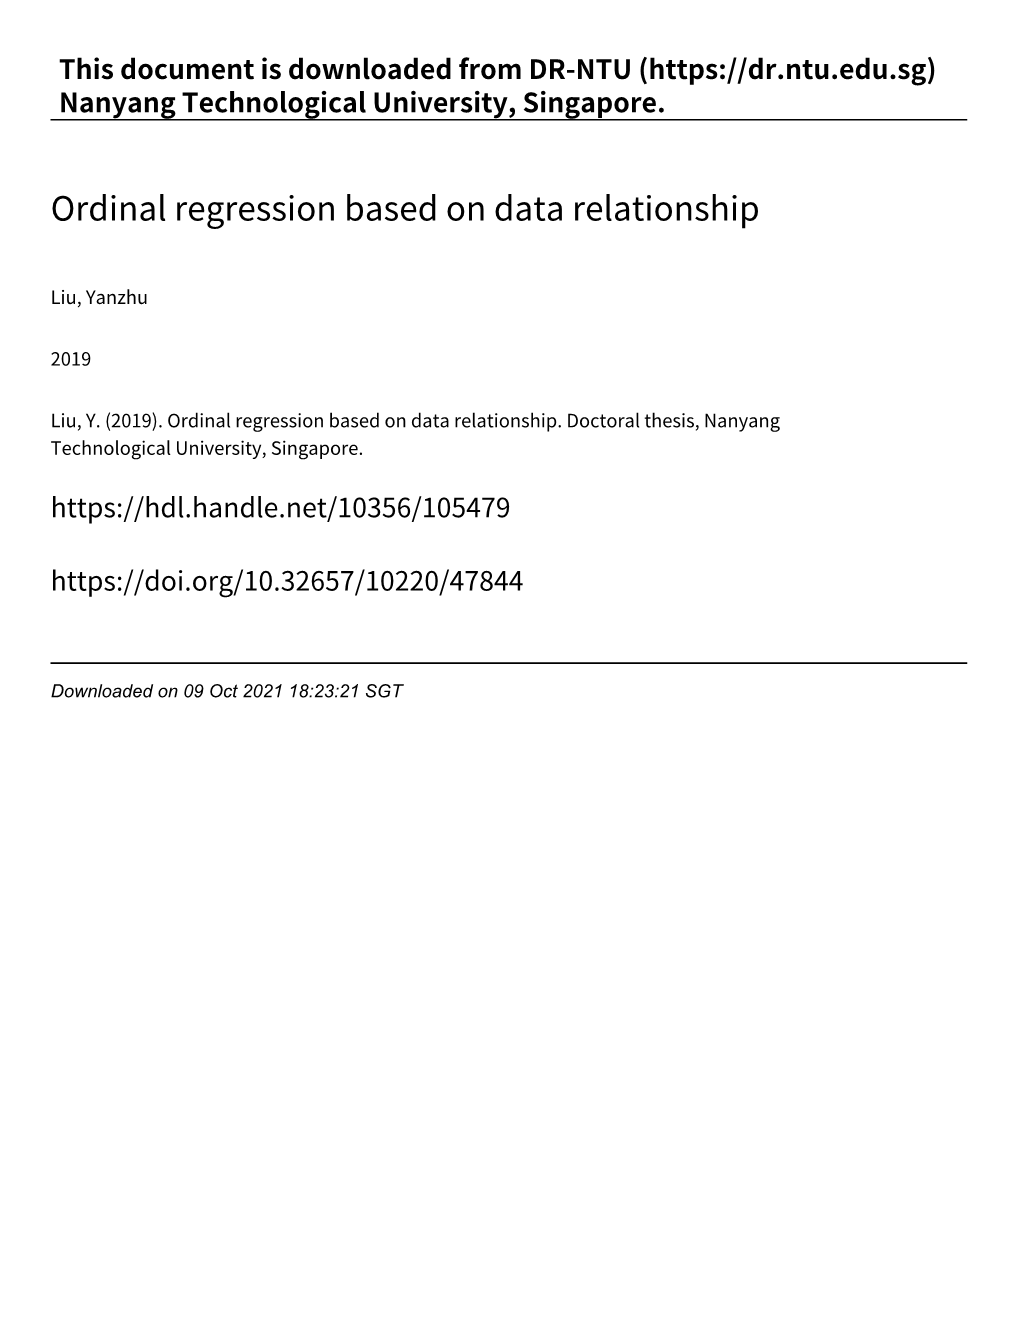 Ordinal Regression Based on Data Relationship